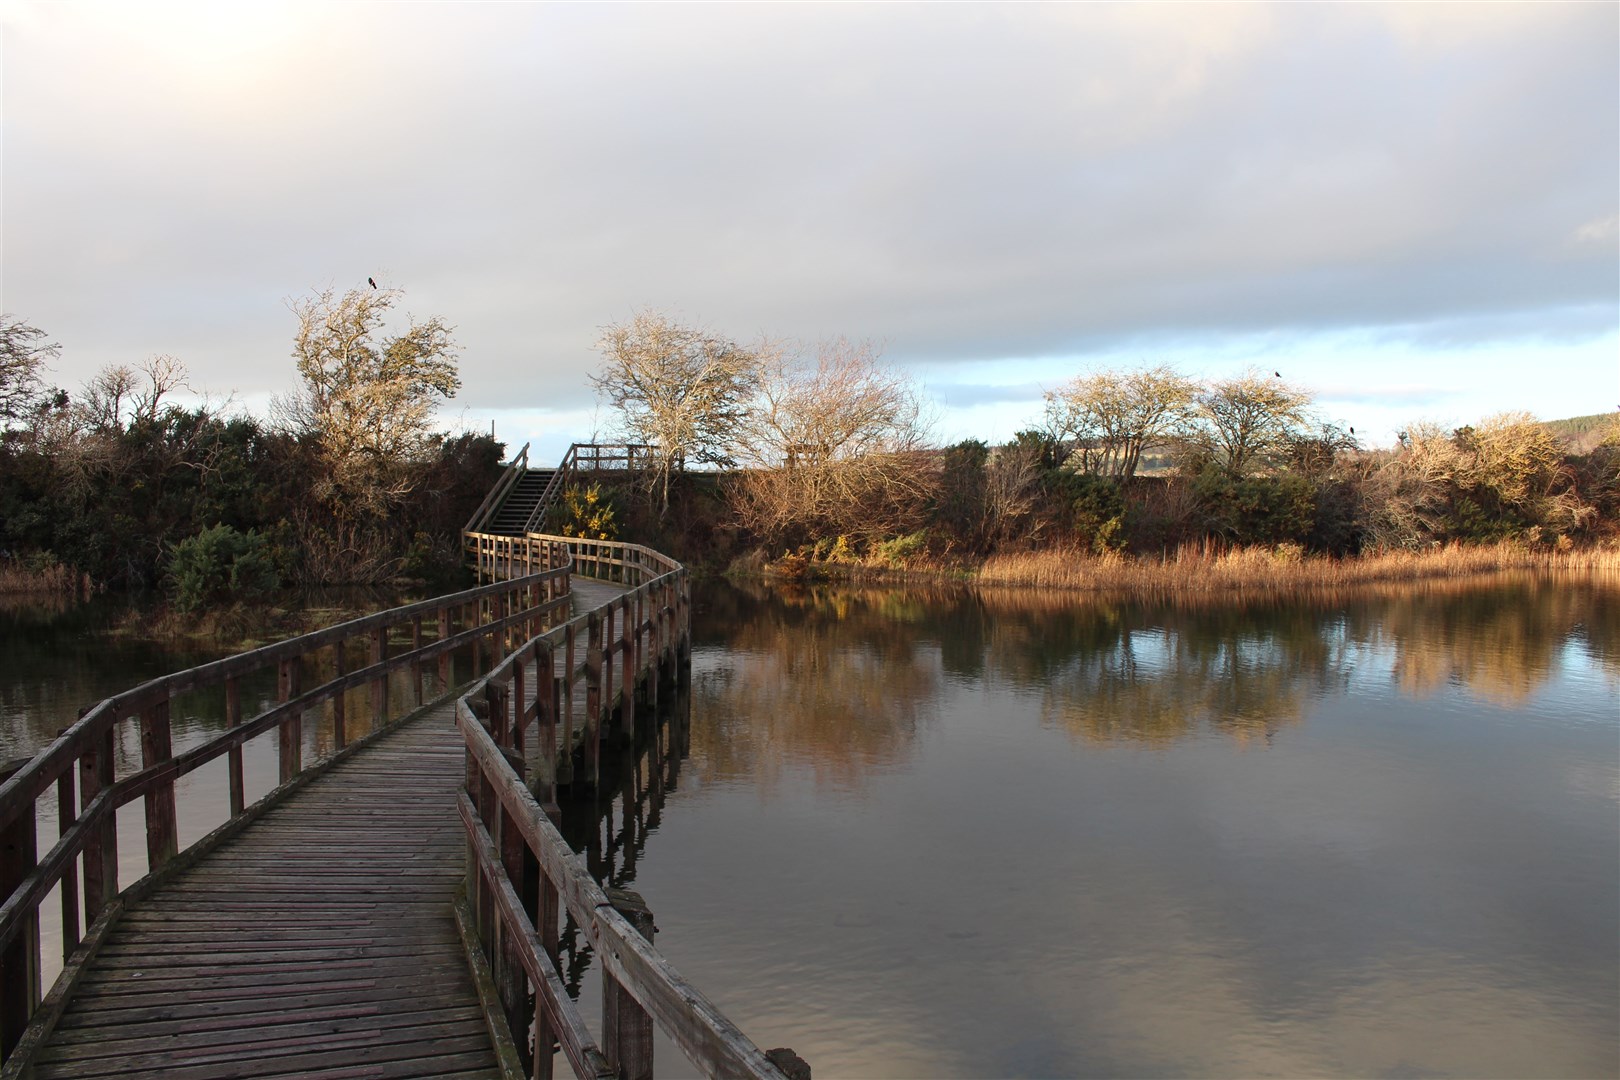 Boardwalk at Merkinch Nature Reserve in Inverness.